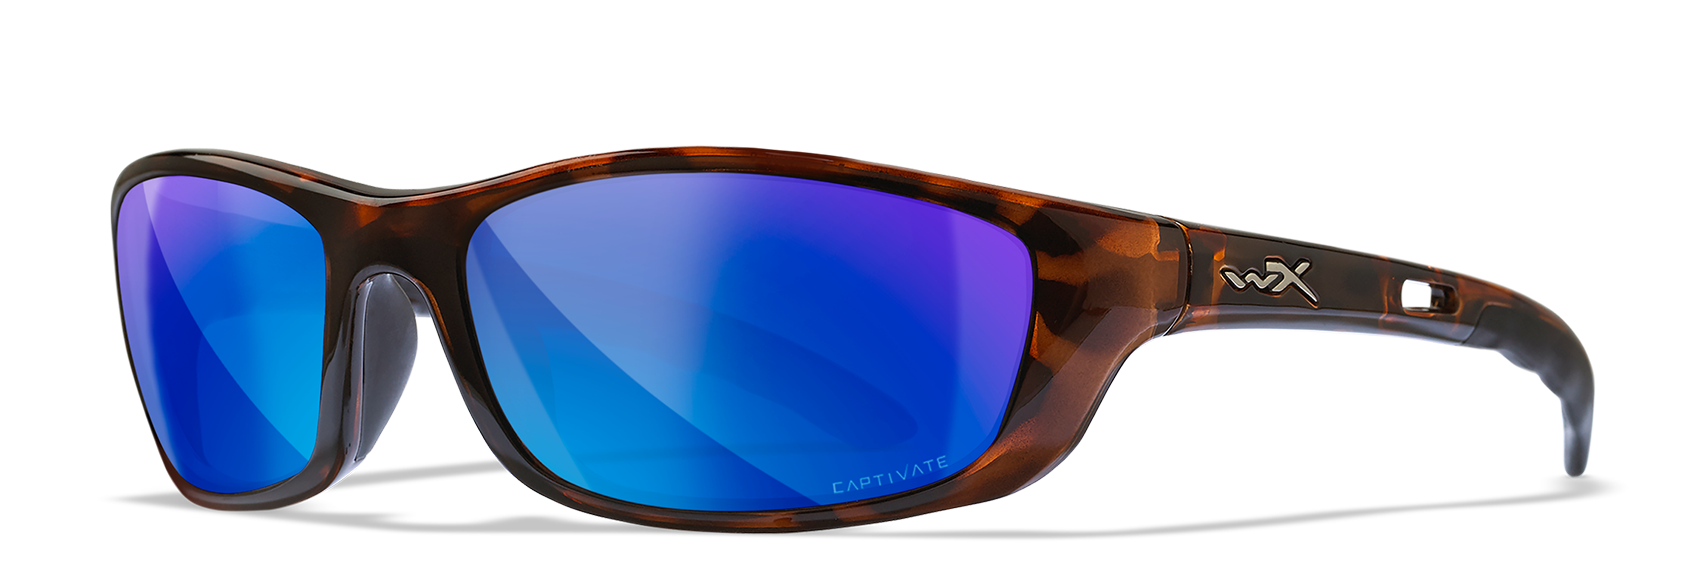 Wiley X P-17 Oval Sunglasses  Gloss Demi 61-18-120